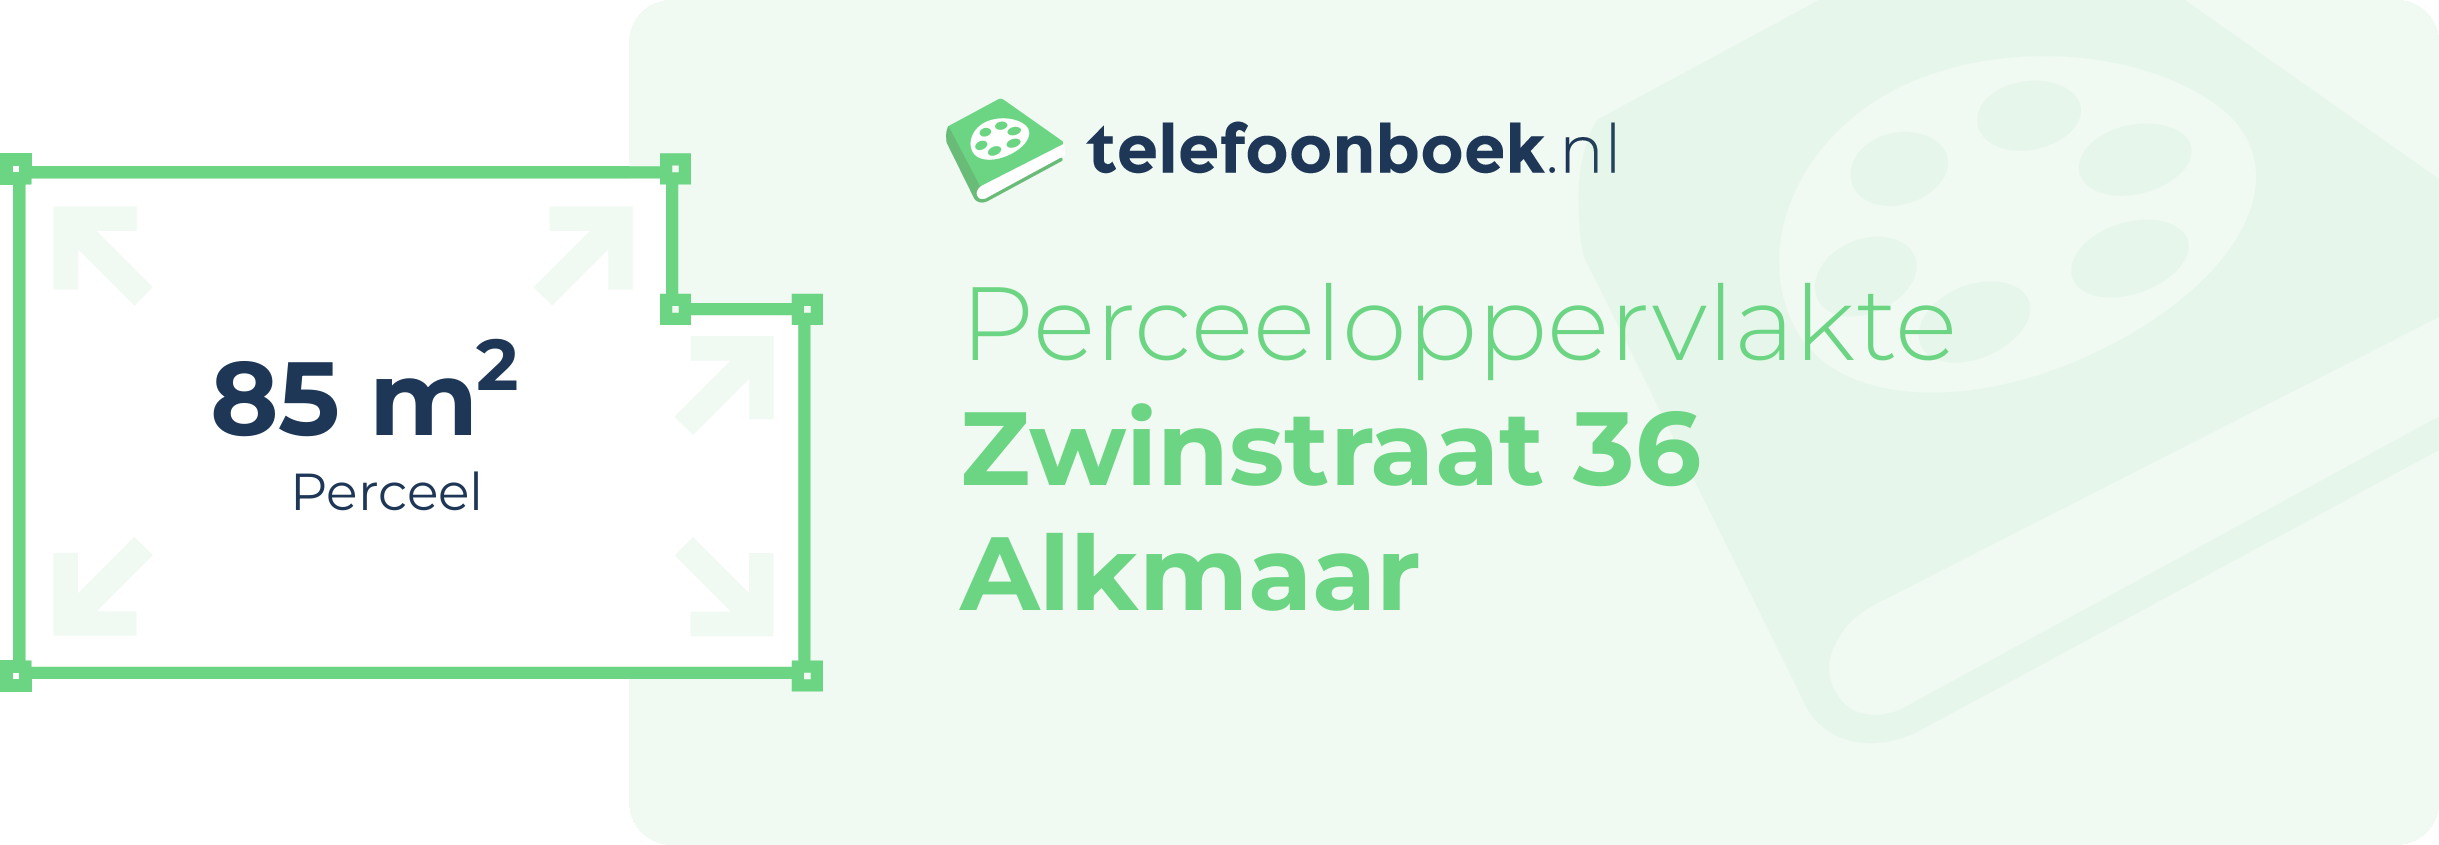 Perceeloppervlakte Zwinstraat 36 Alkmaar